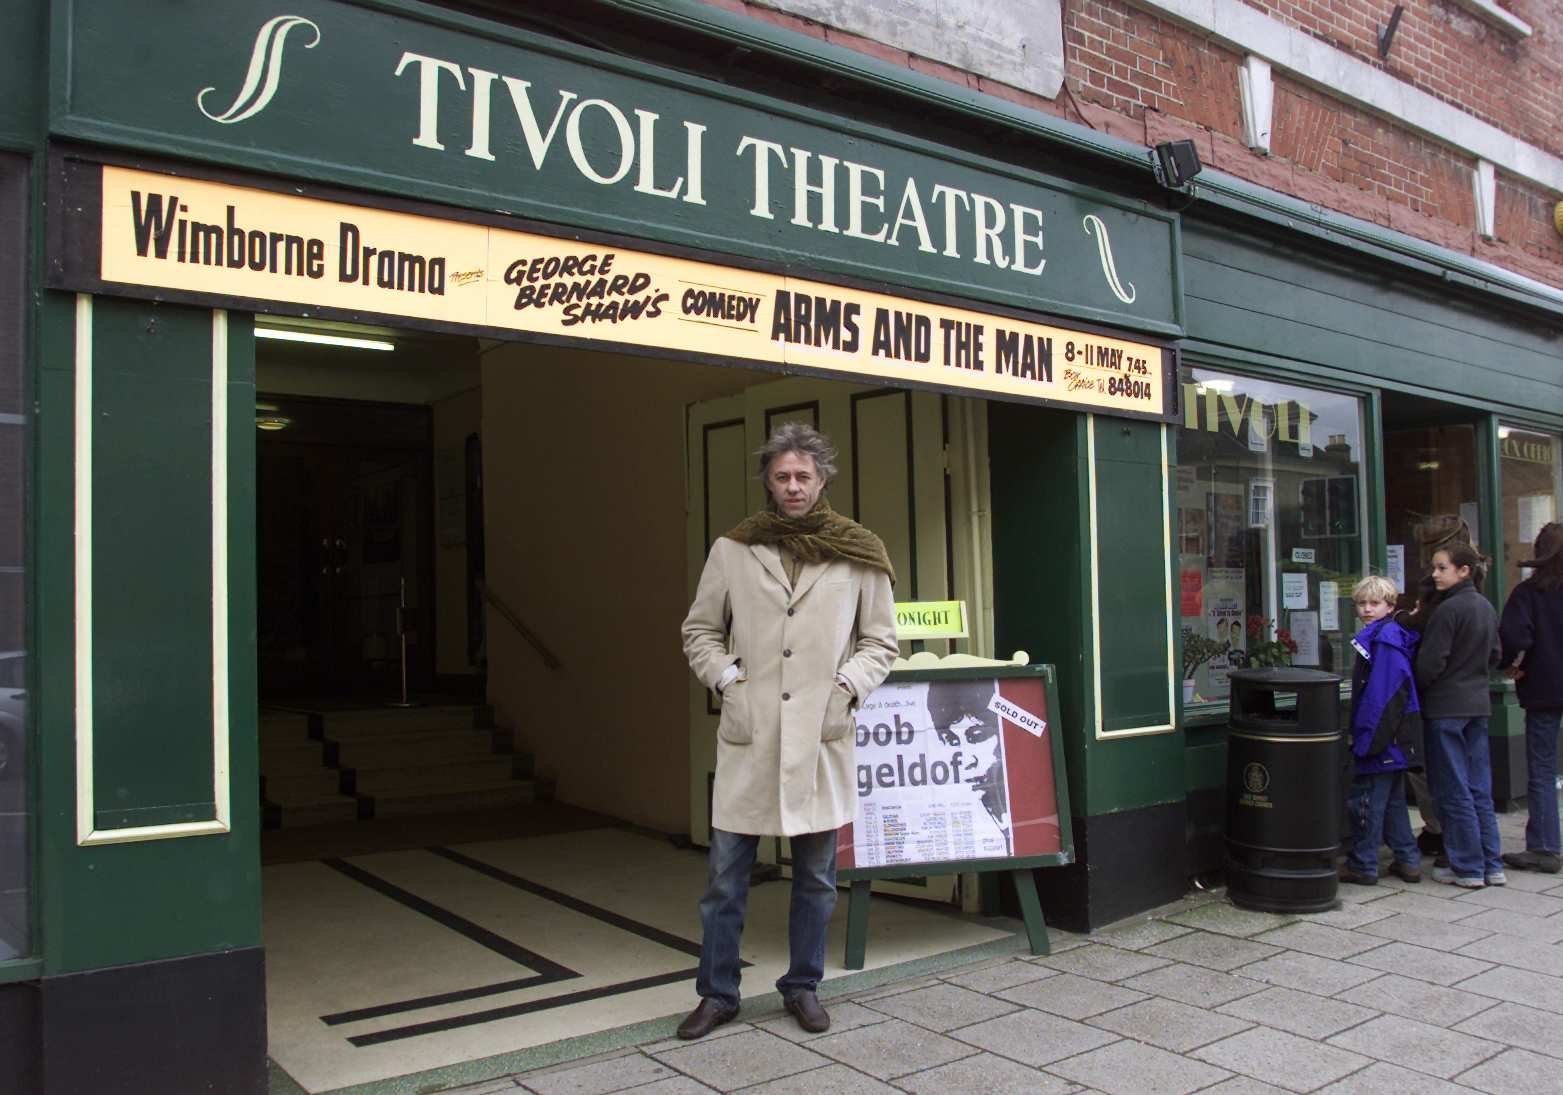 Bob Geldof in Wimborne on the day of his concert at the Tivoli Theatre: Bob Geldof outside the Tivoli